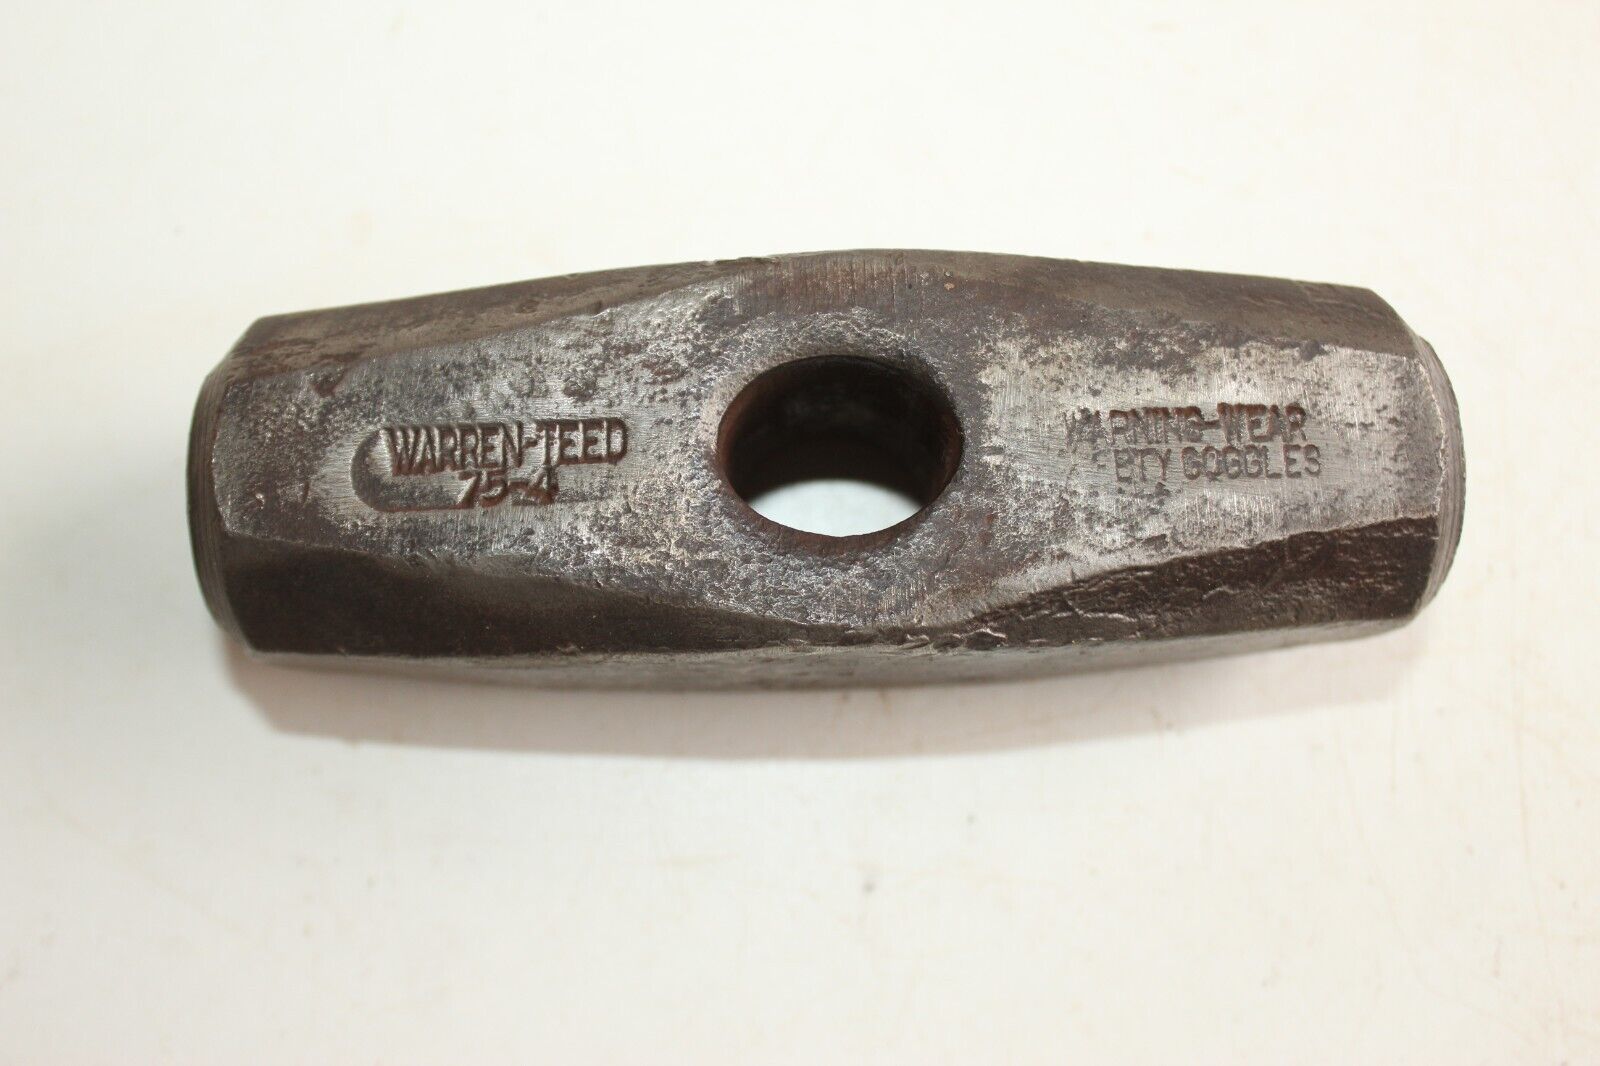 k) Vintage blacksmith sledge hammer head ~ WARREN-TEED No.75-4